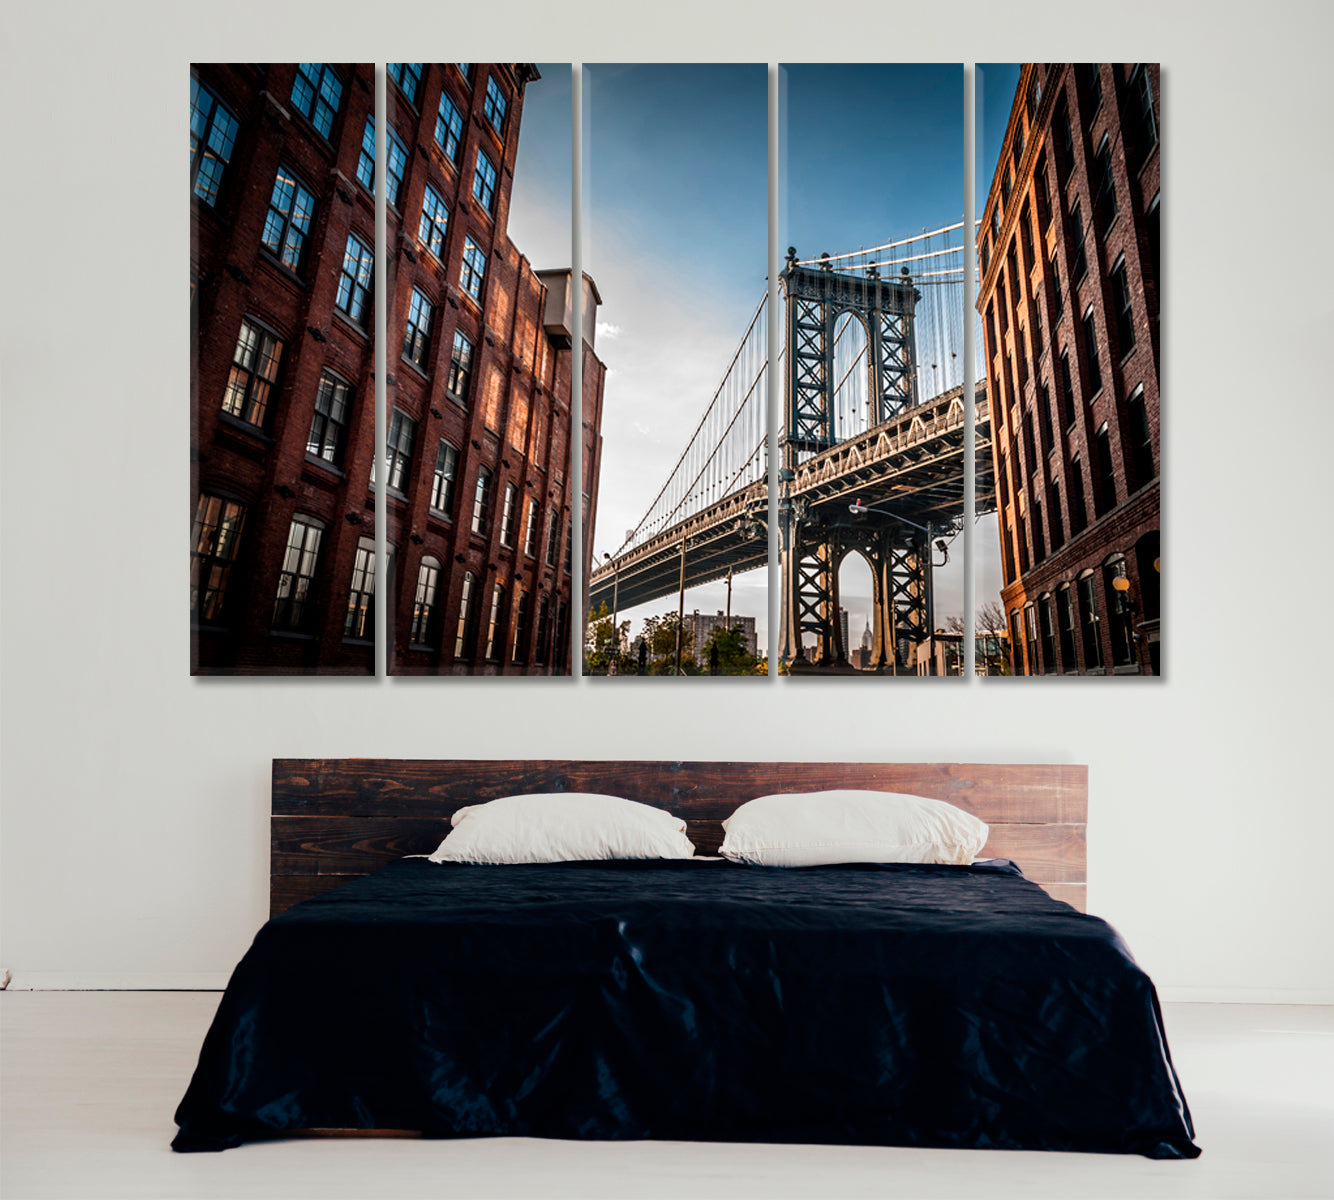 Manhattan Bridge Seen from Narrow Alley Canvas Print ArtLexy 5 Panels 36"x24" inches 